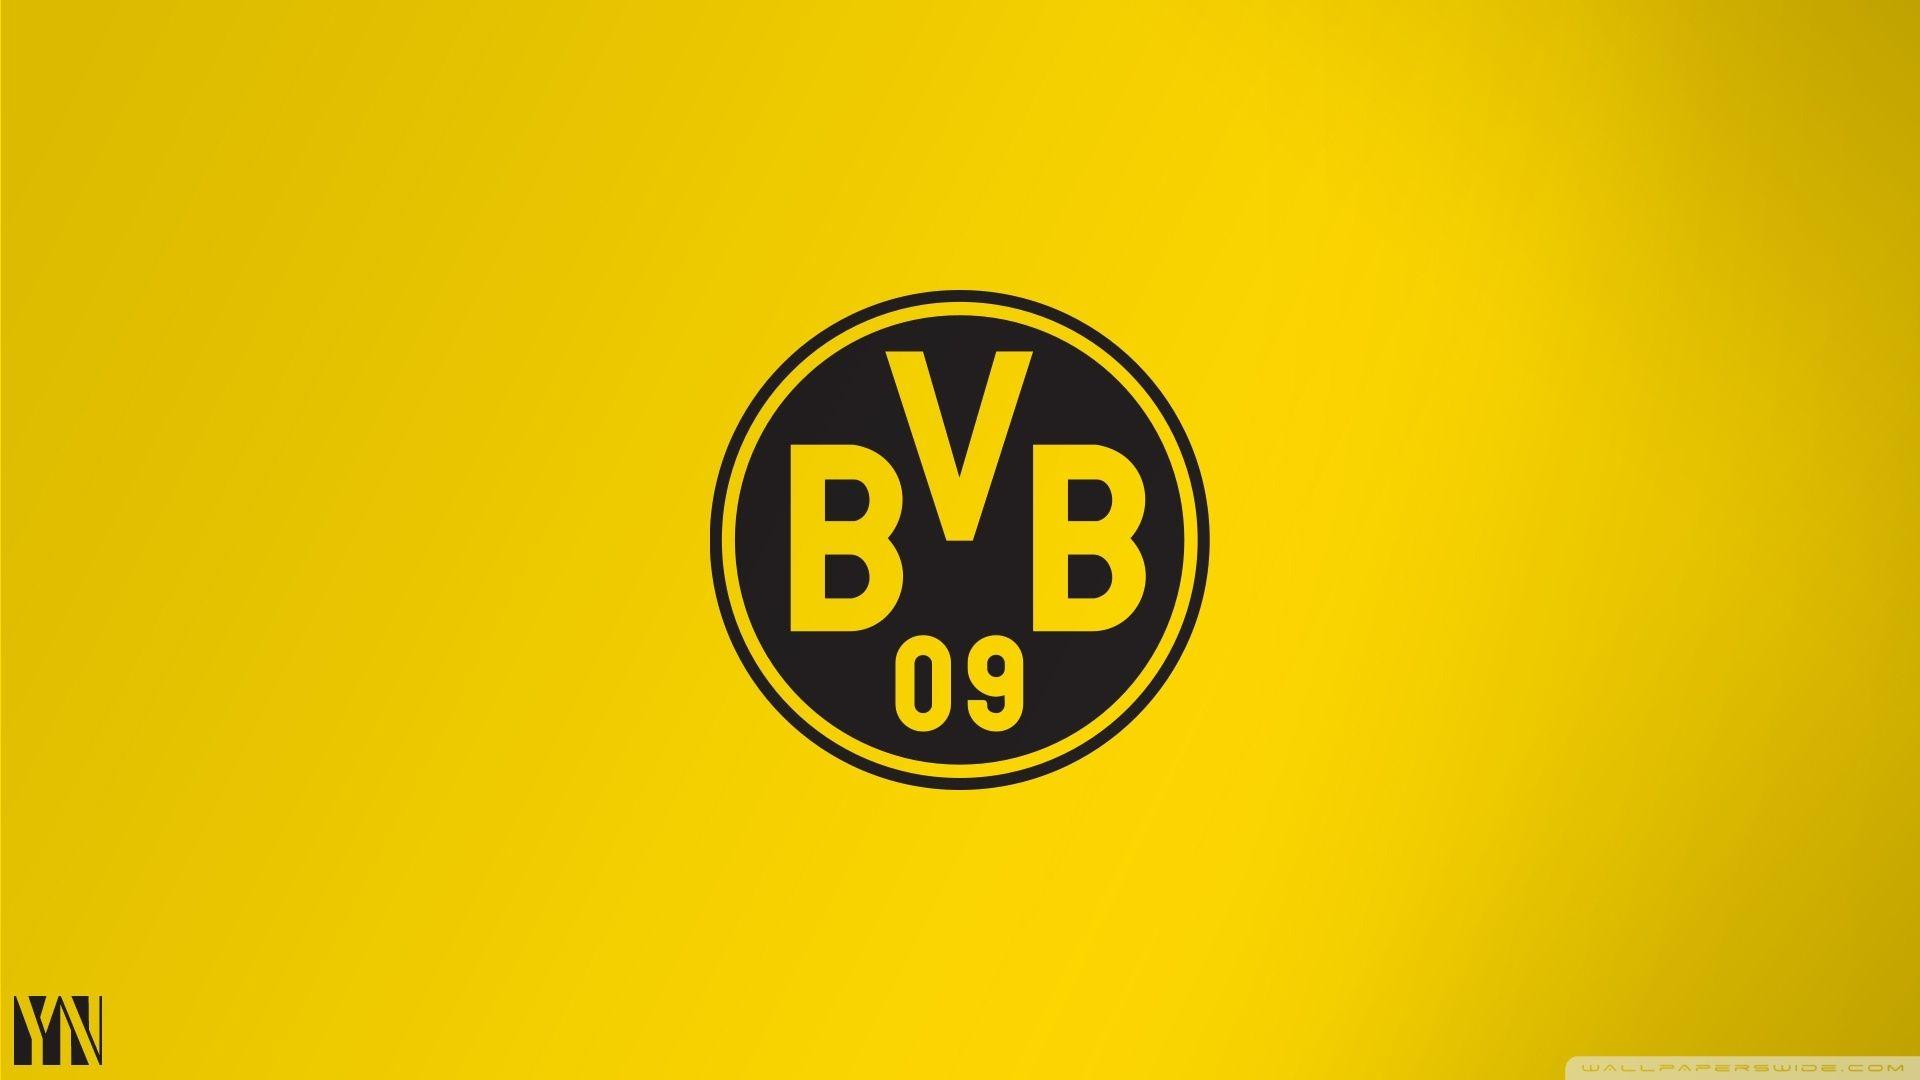 Beautiful Borussia Dortmund Smartphone Wallpaper. Great Foofball Club